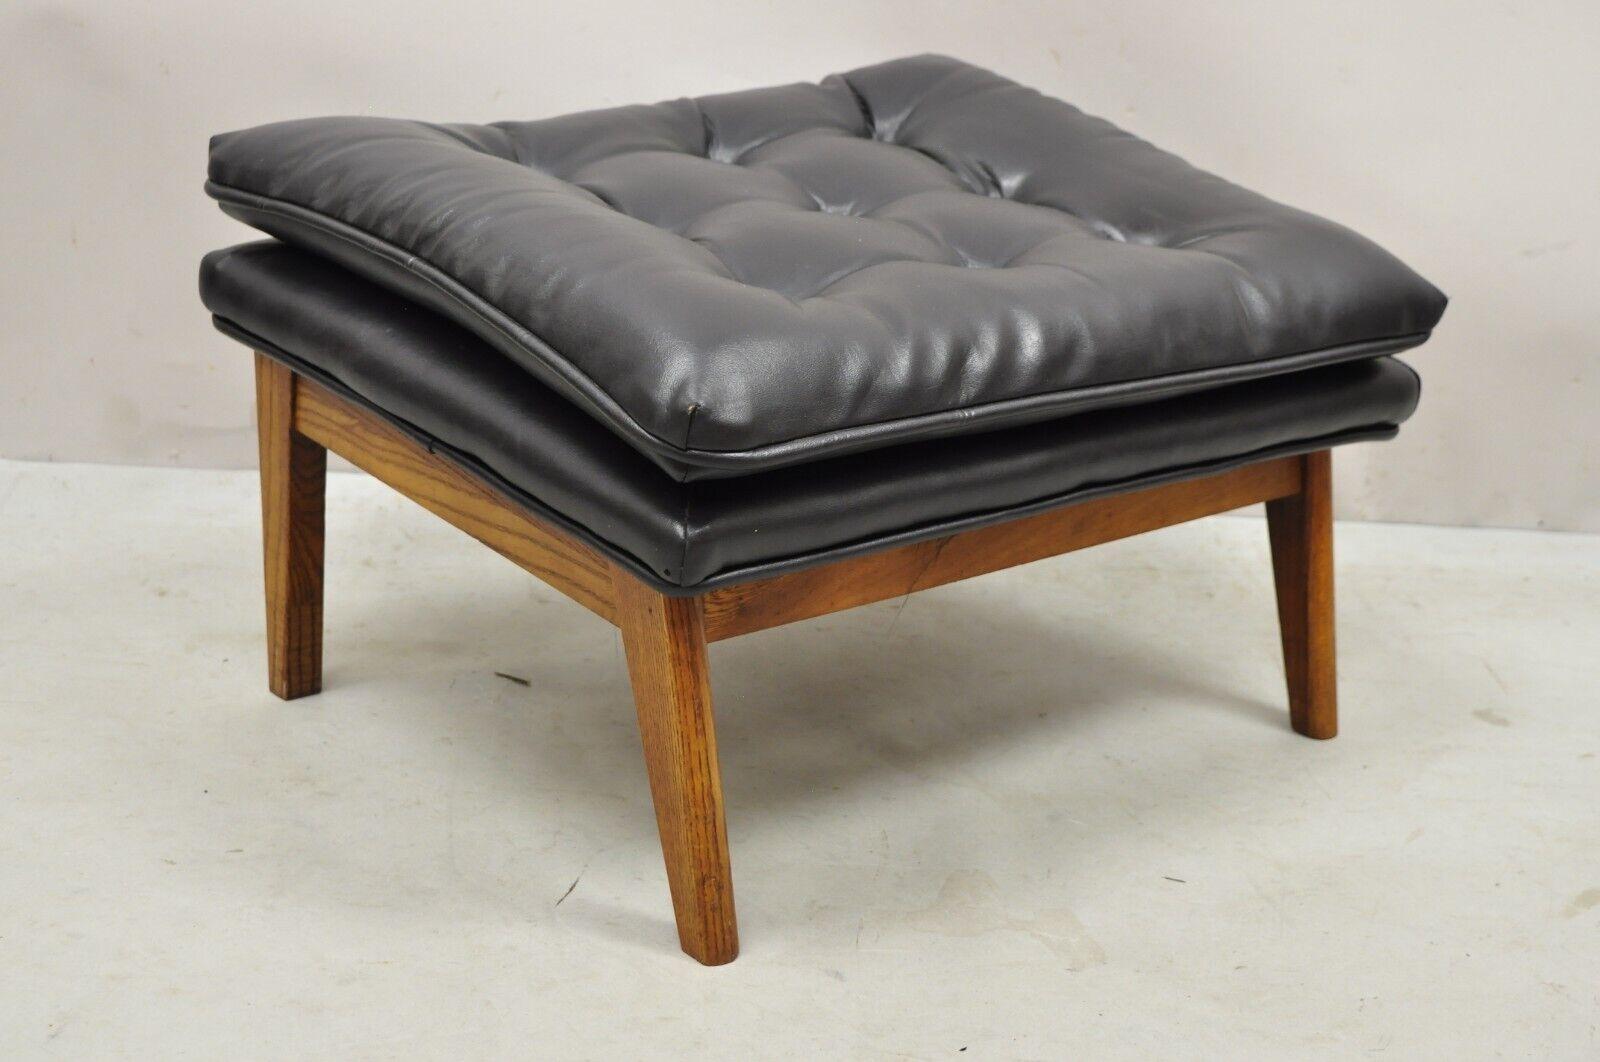 20th Century Vintage Mid-Century Modern Black Tufted Vinyl Lounge Chair Footstool Ottoman